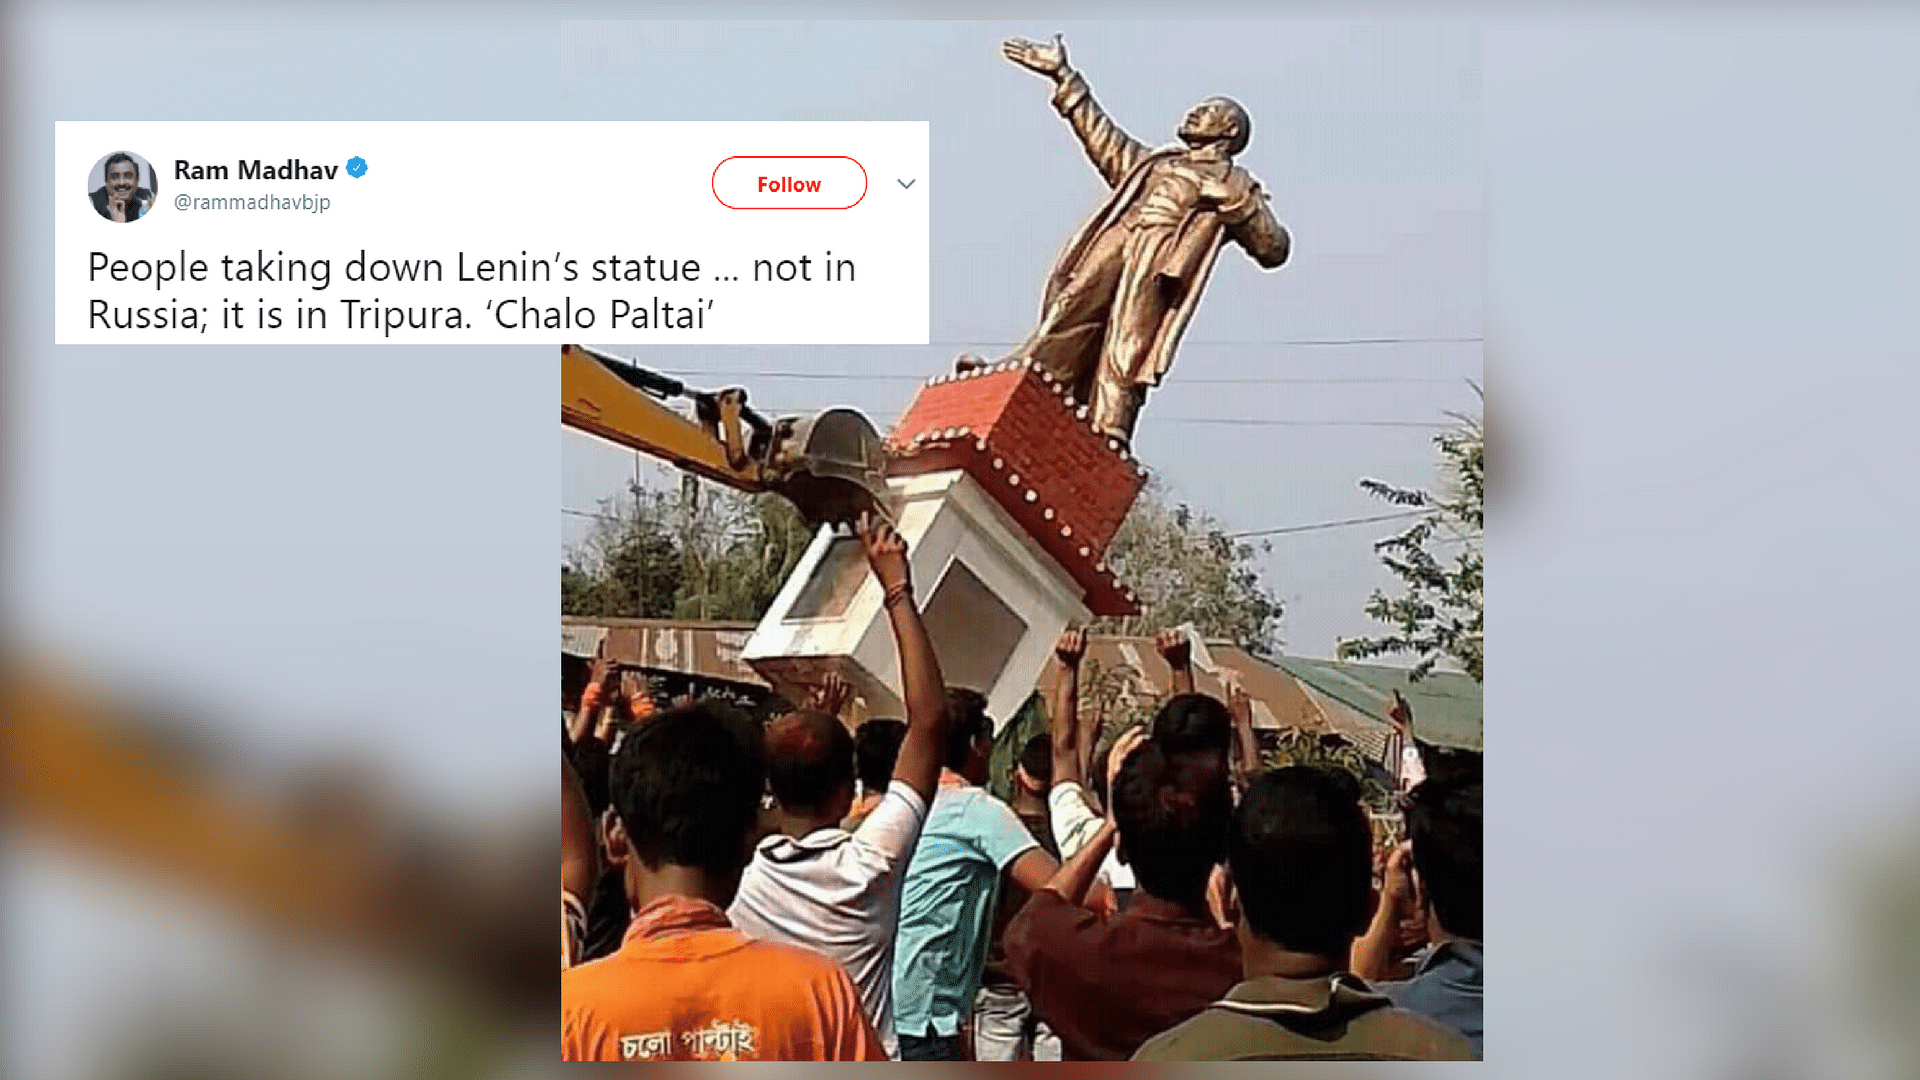 Vladimir Lenin statue being taken down in Tripura.